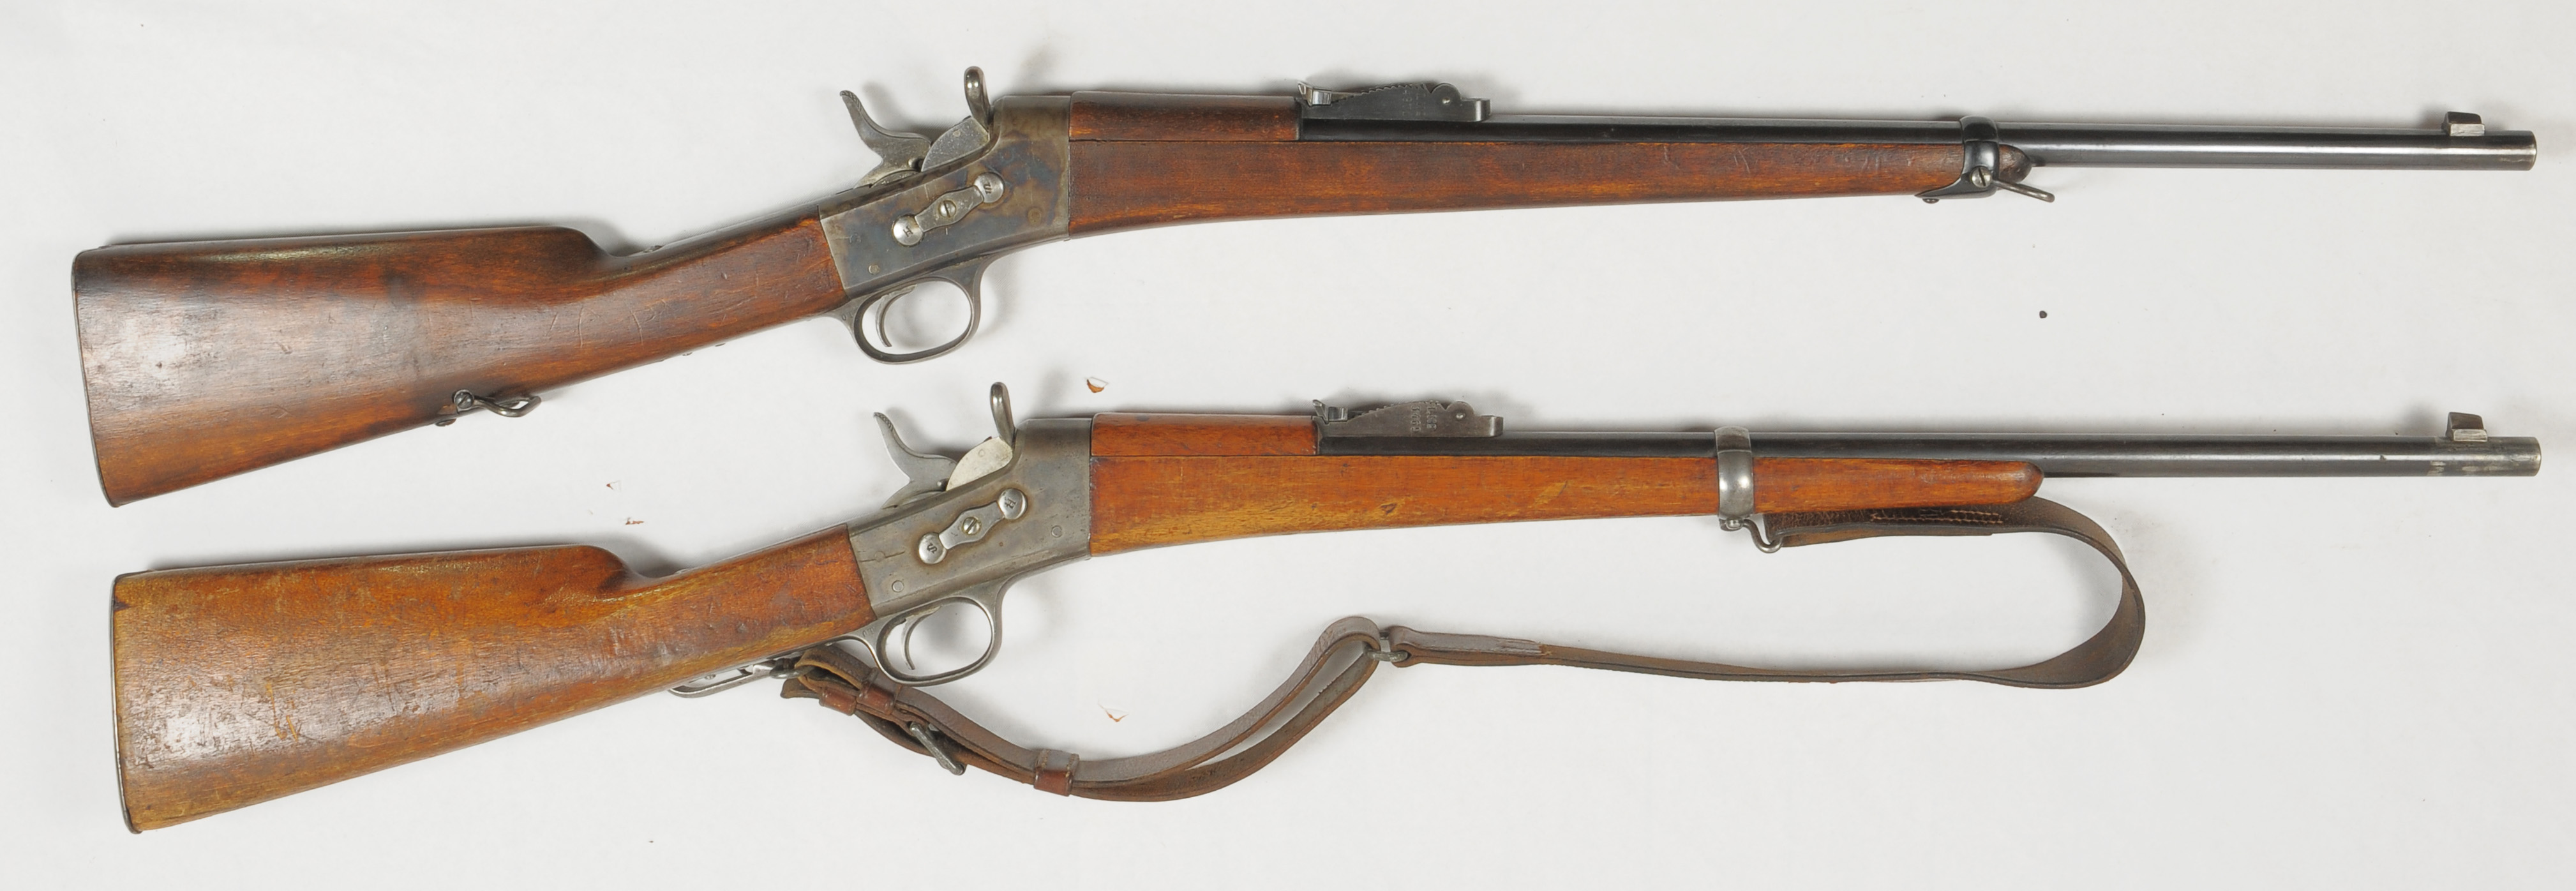 ./guns/rifle/bilder/Rifle-Kongsberg-RollingBlock-M1891-ING-KAV-1.jpg